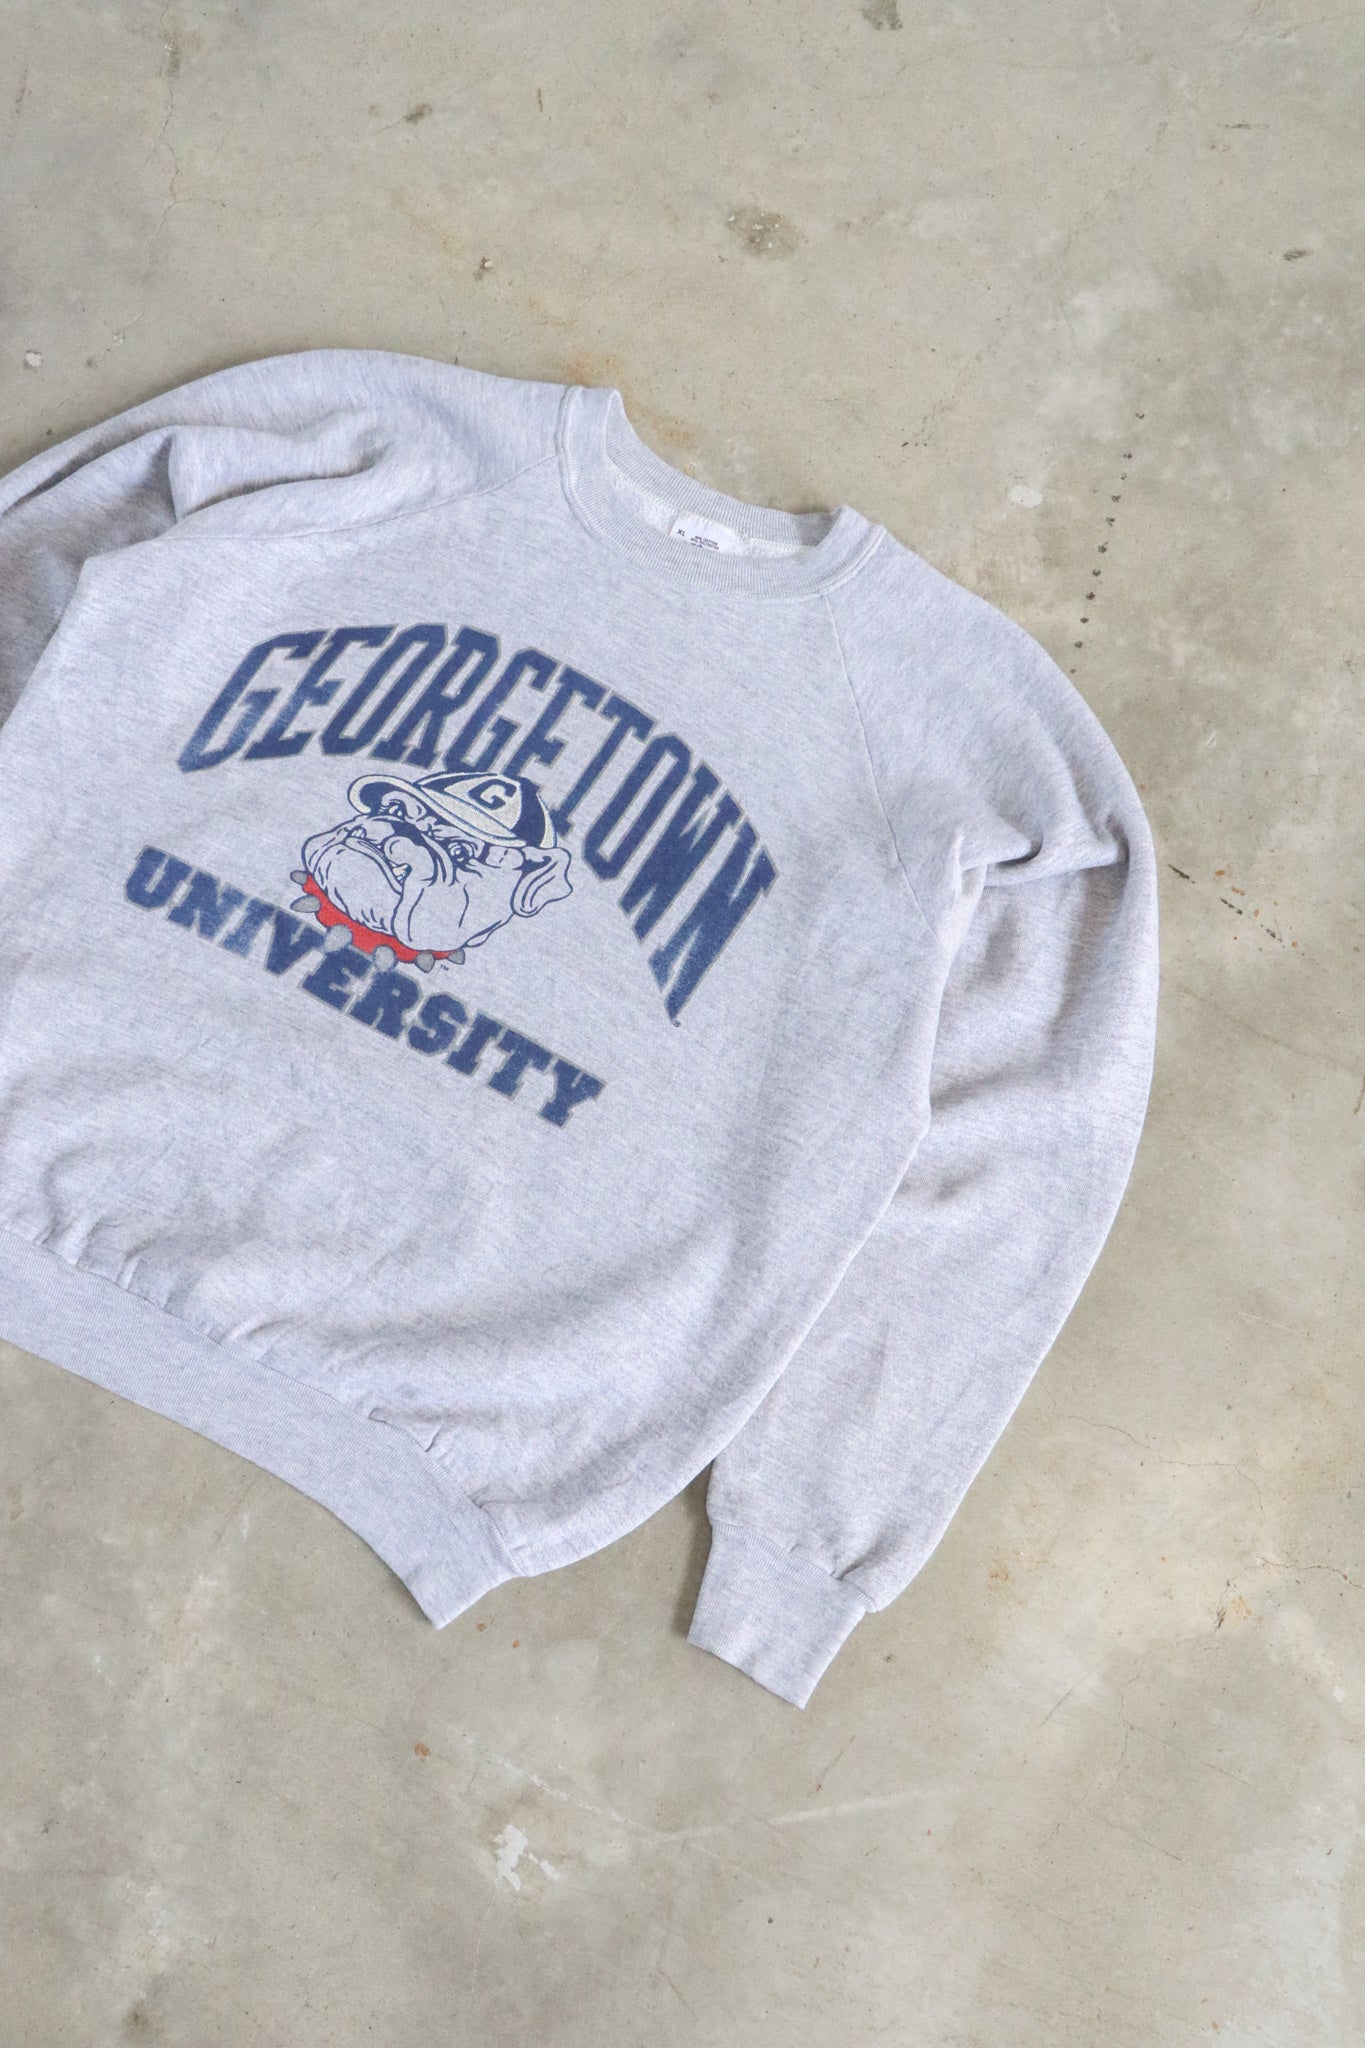 Vintage Georgetown University Sweater XL